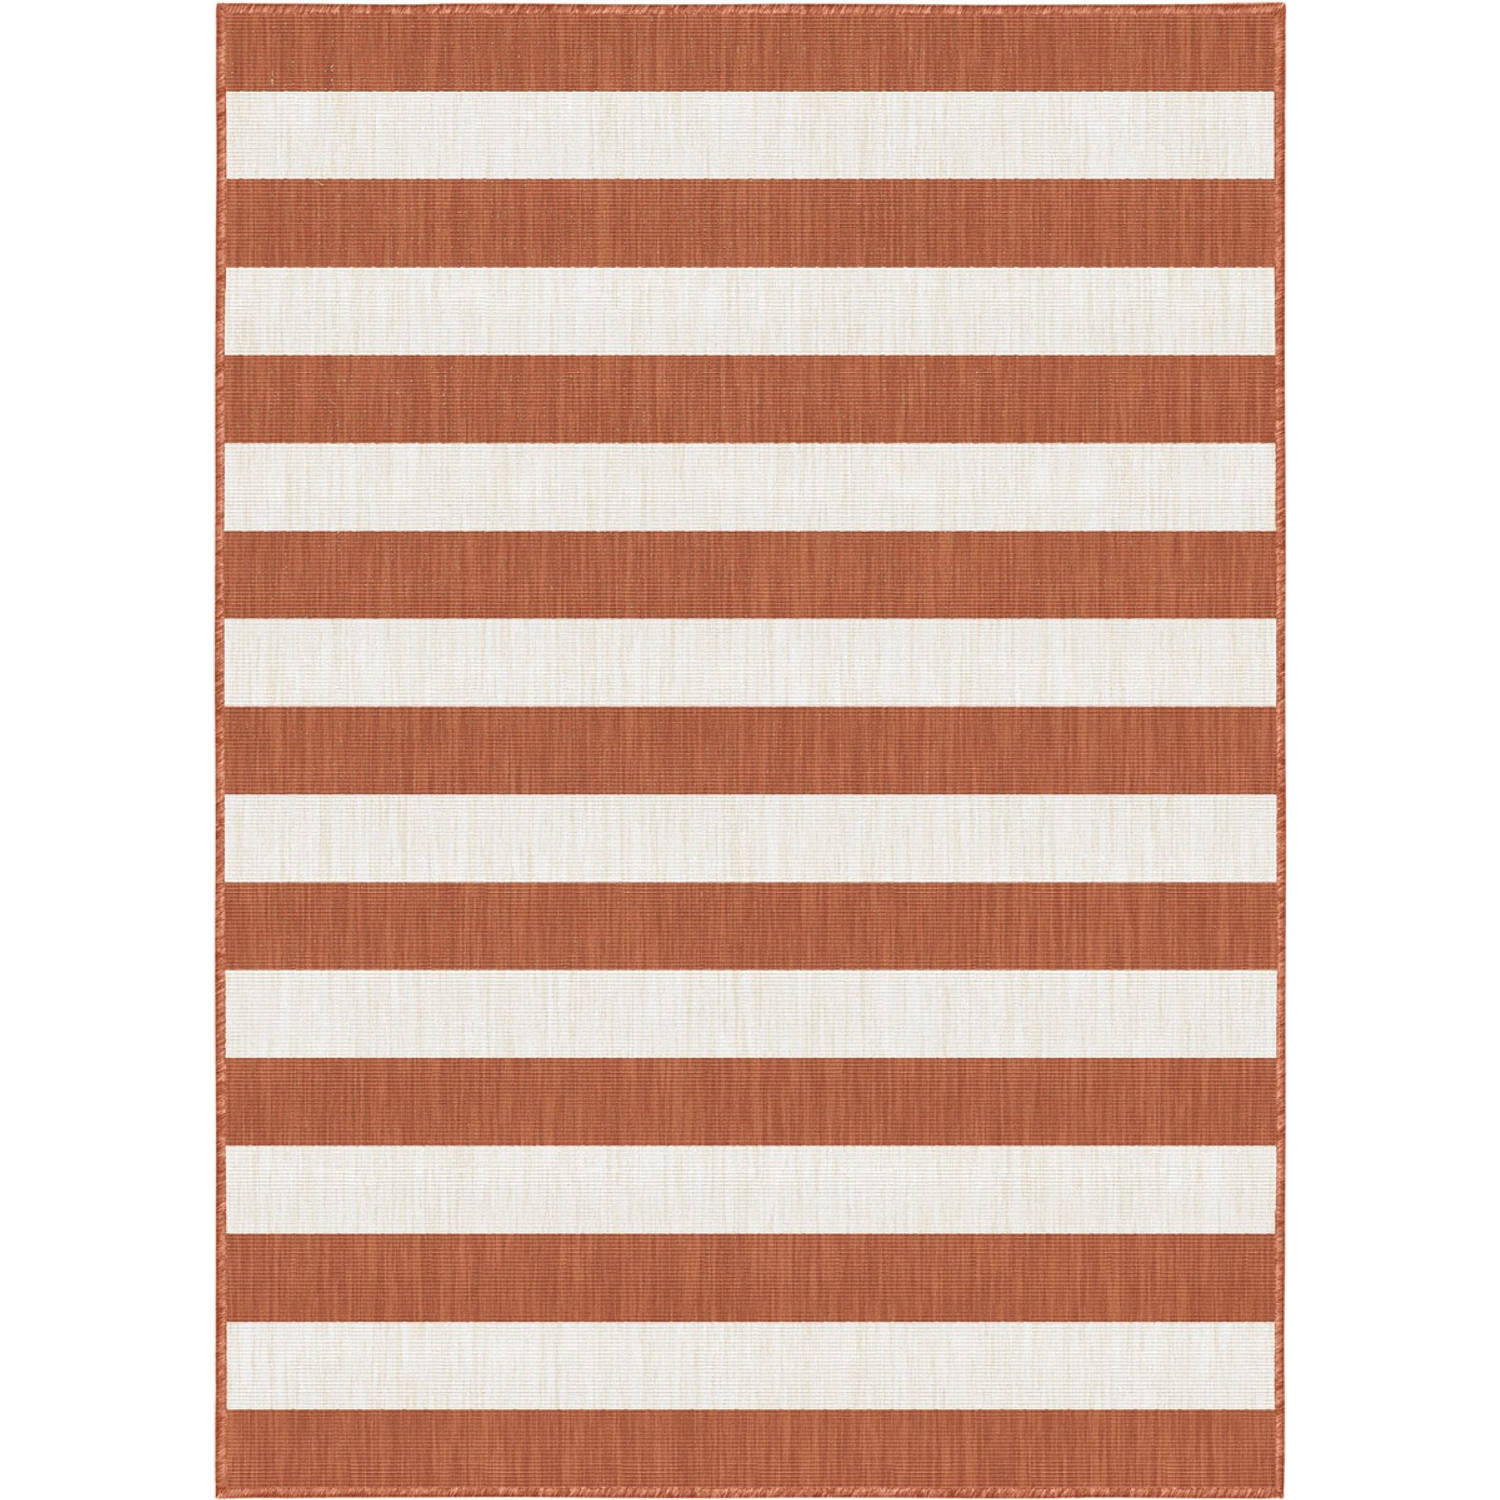 Buitenkleed Stripes roest/wit dubbelzijdig